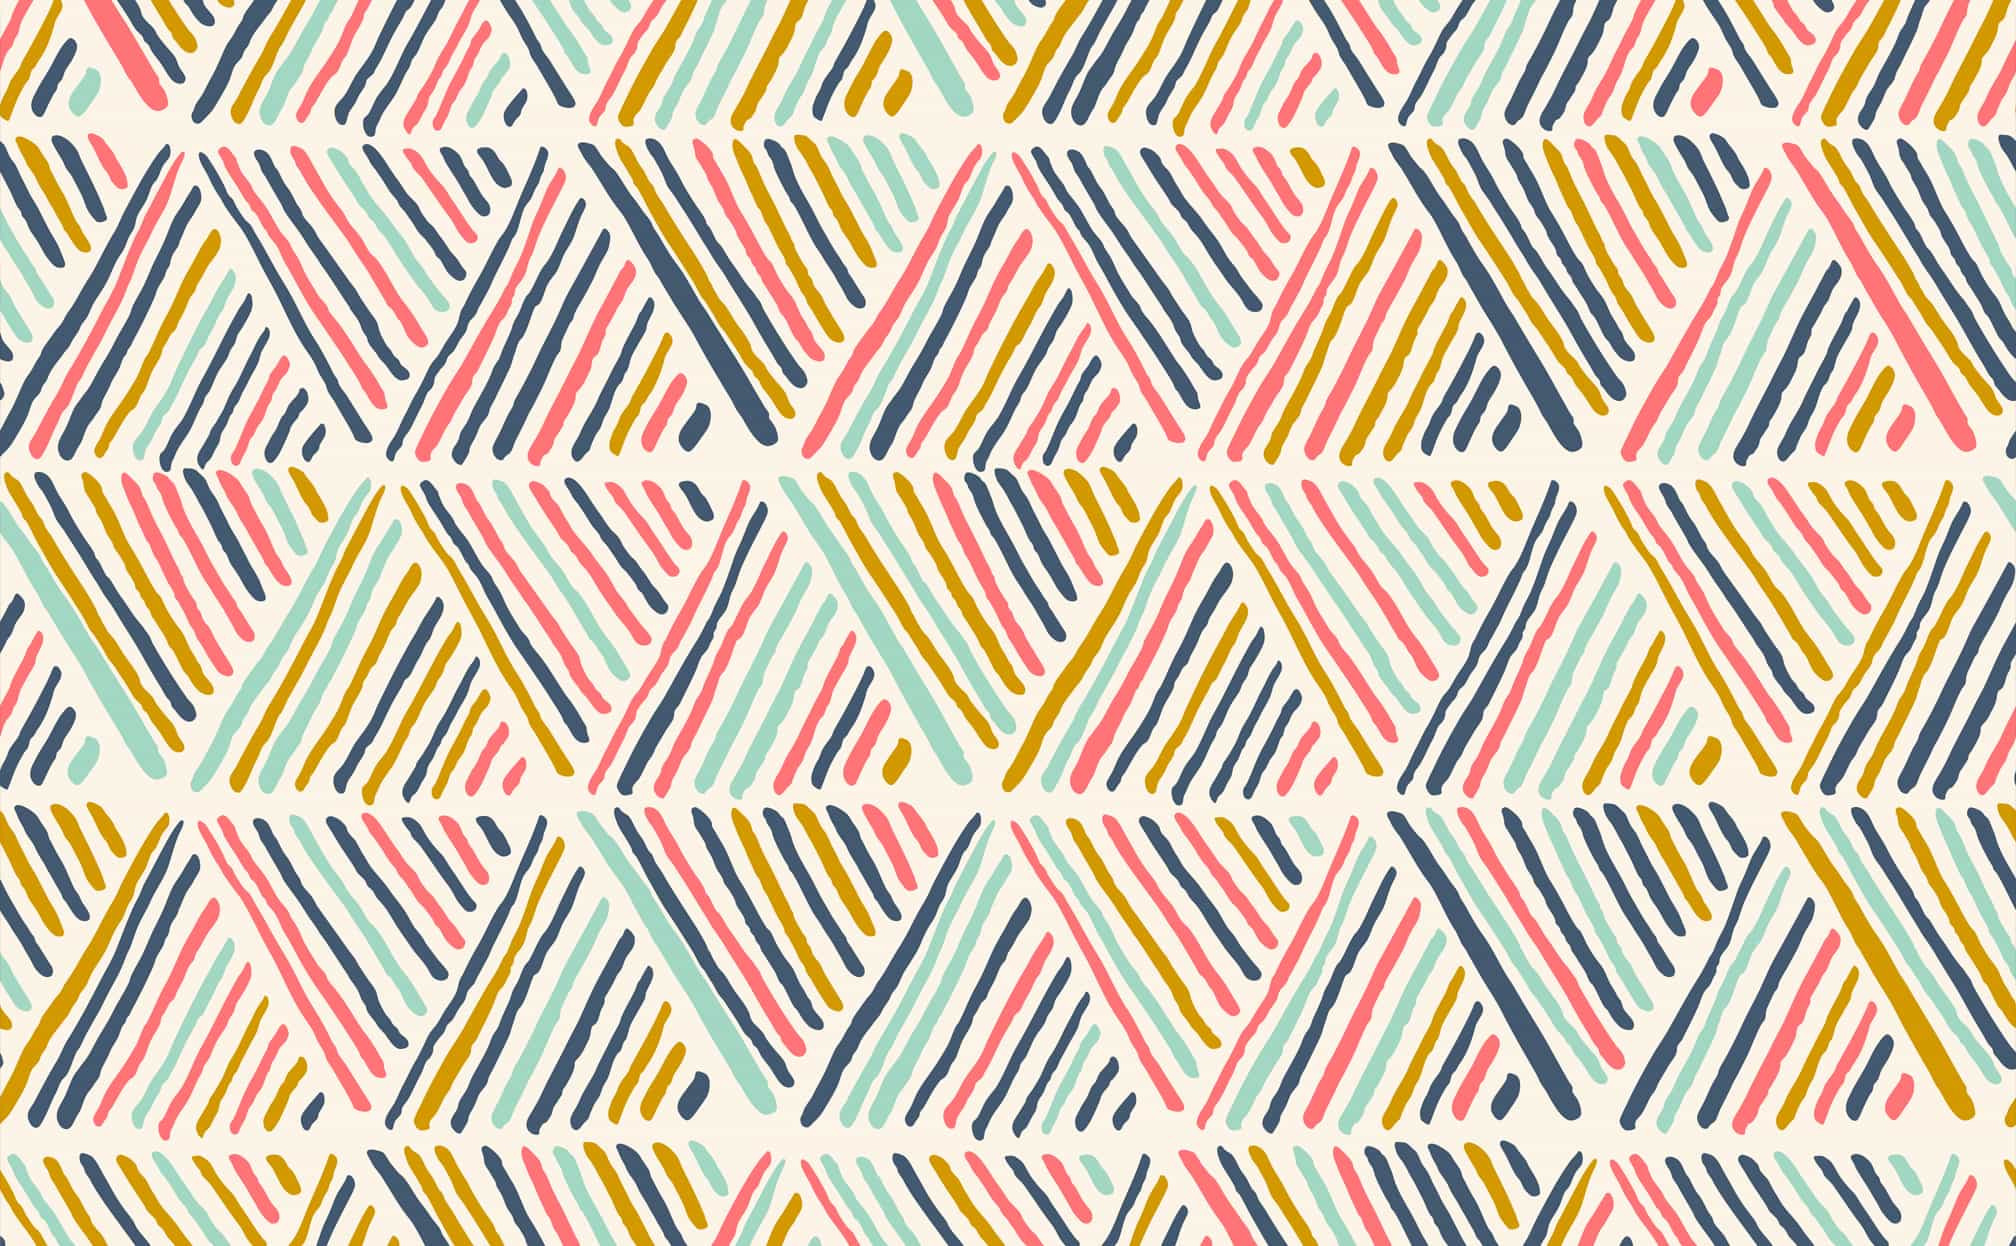 triangle geometric pattern wallpaper